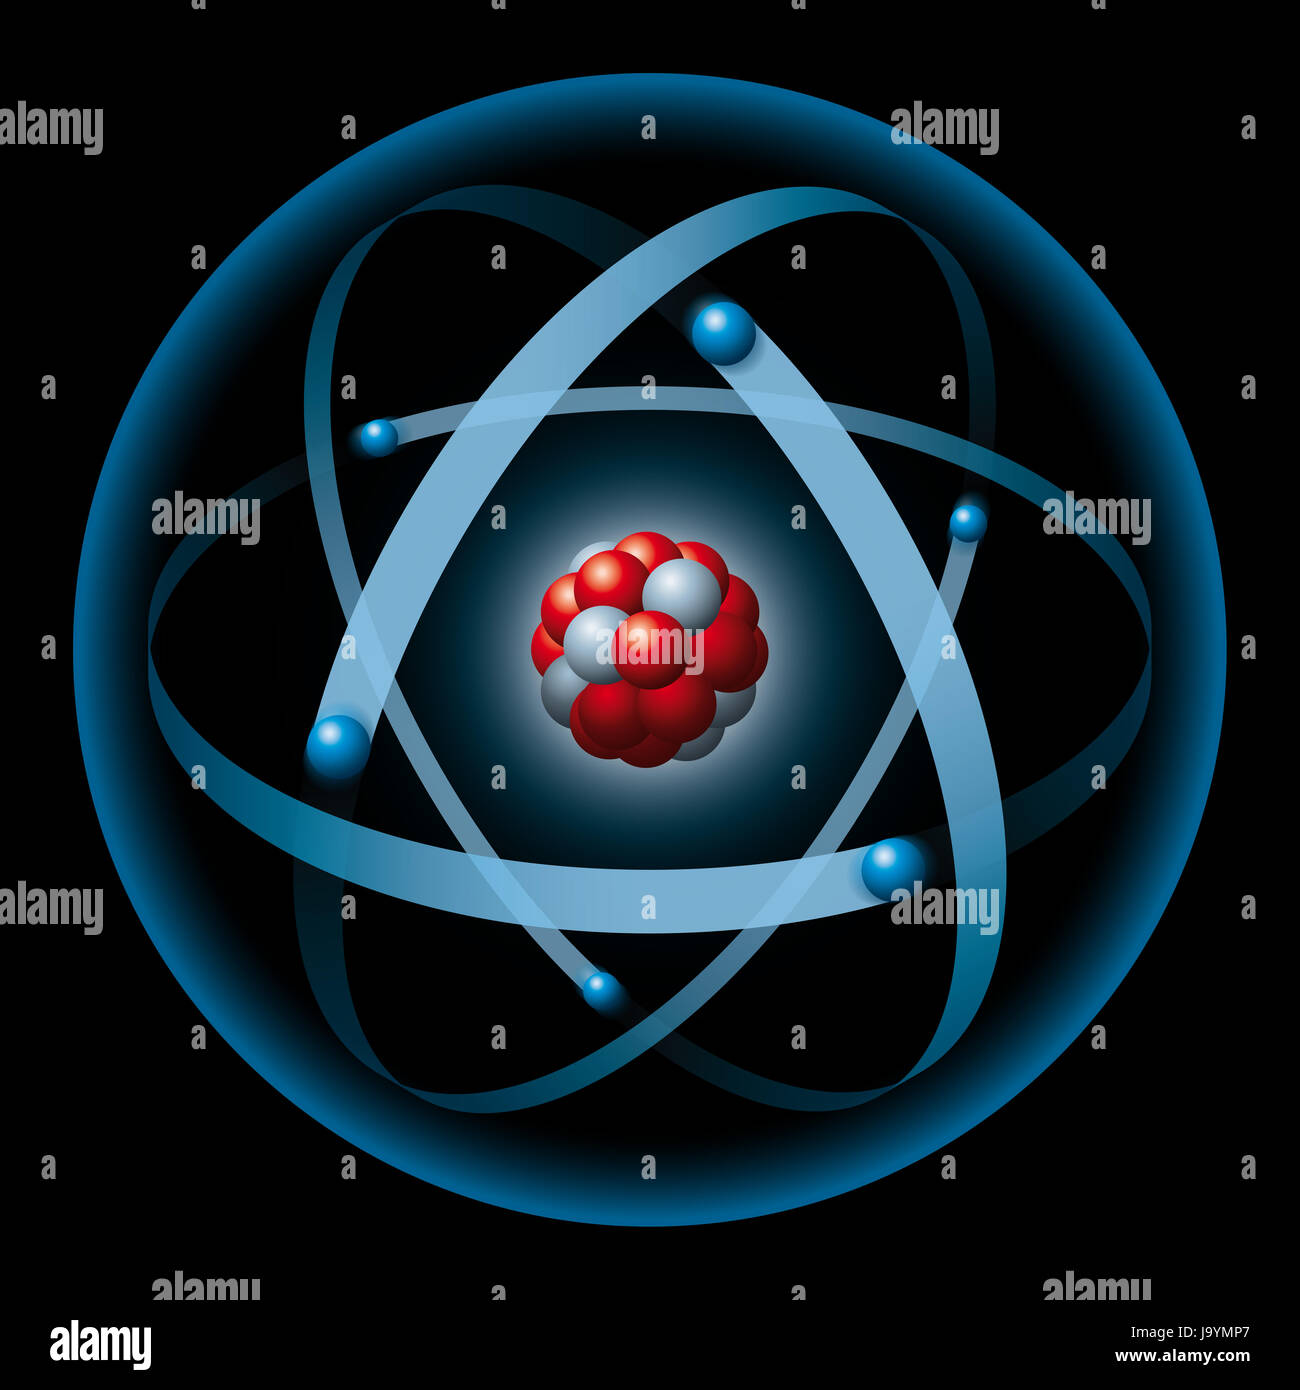 shell, atom, element, neutron, electron, proton, model, blue, shell, energy, Stock Photo